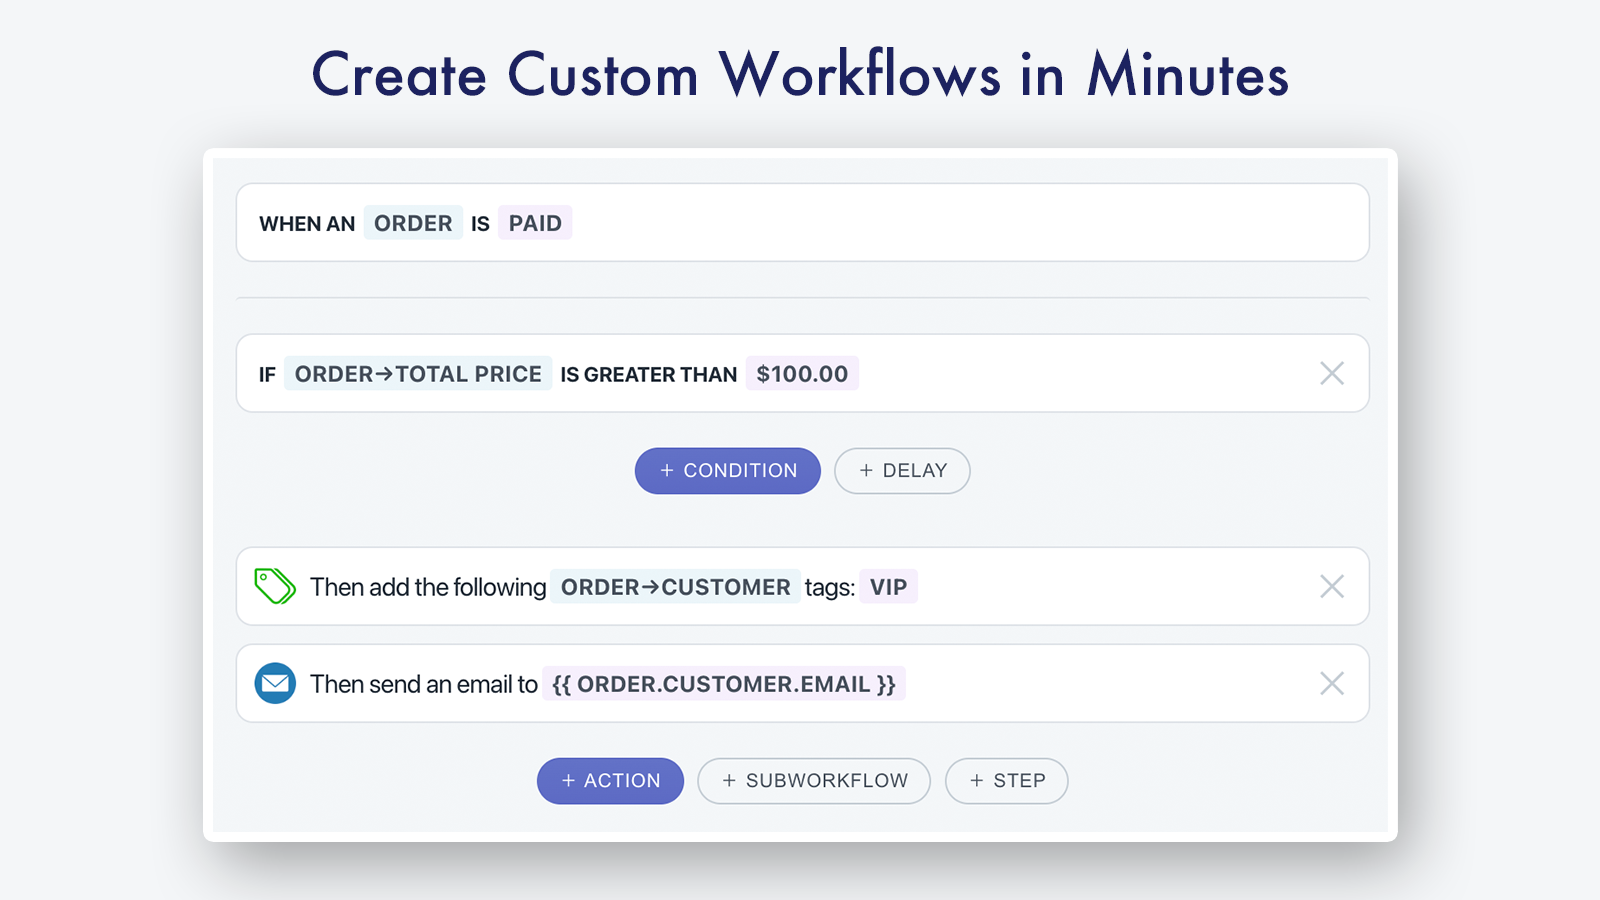 Create custom workflows in minutes